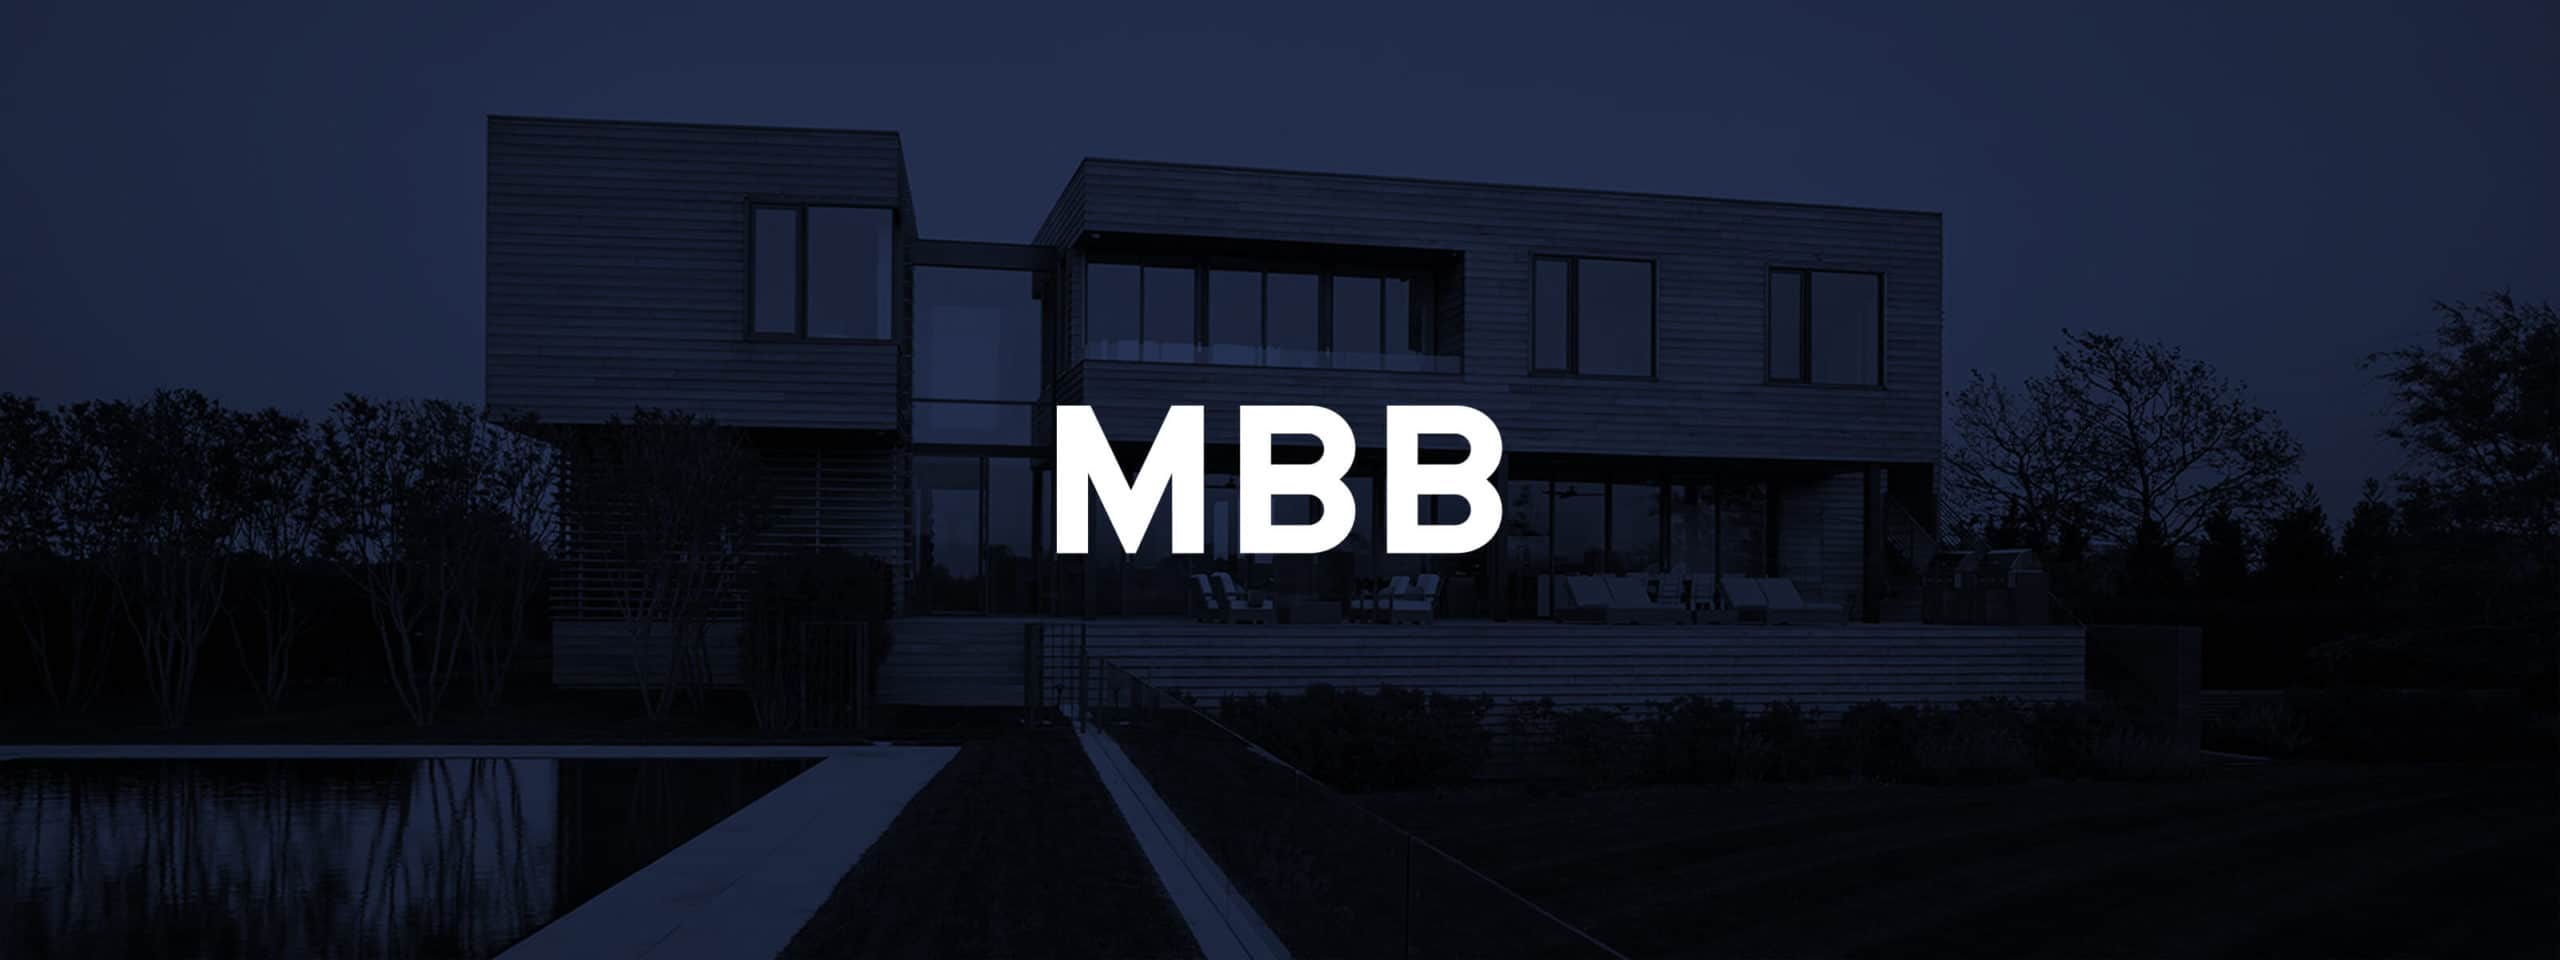 MBB Architects logo and hero